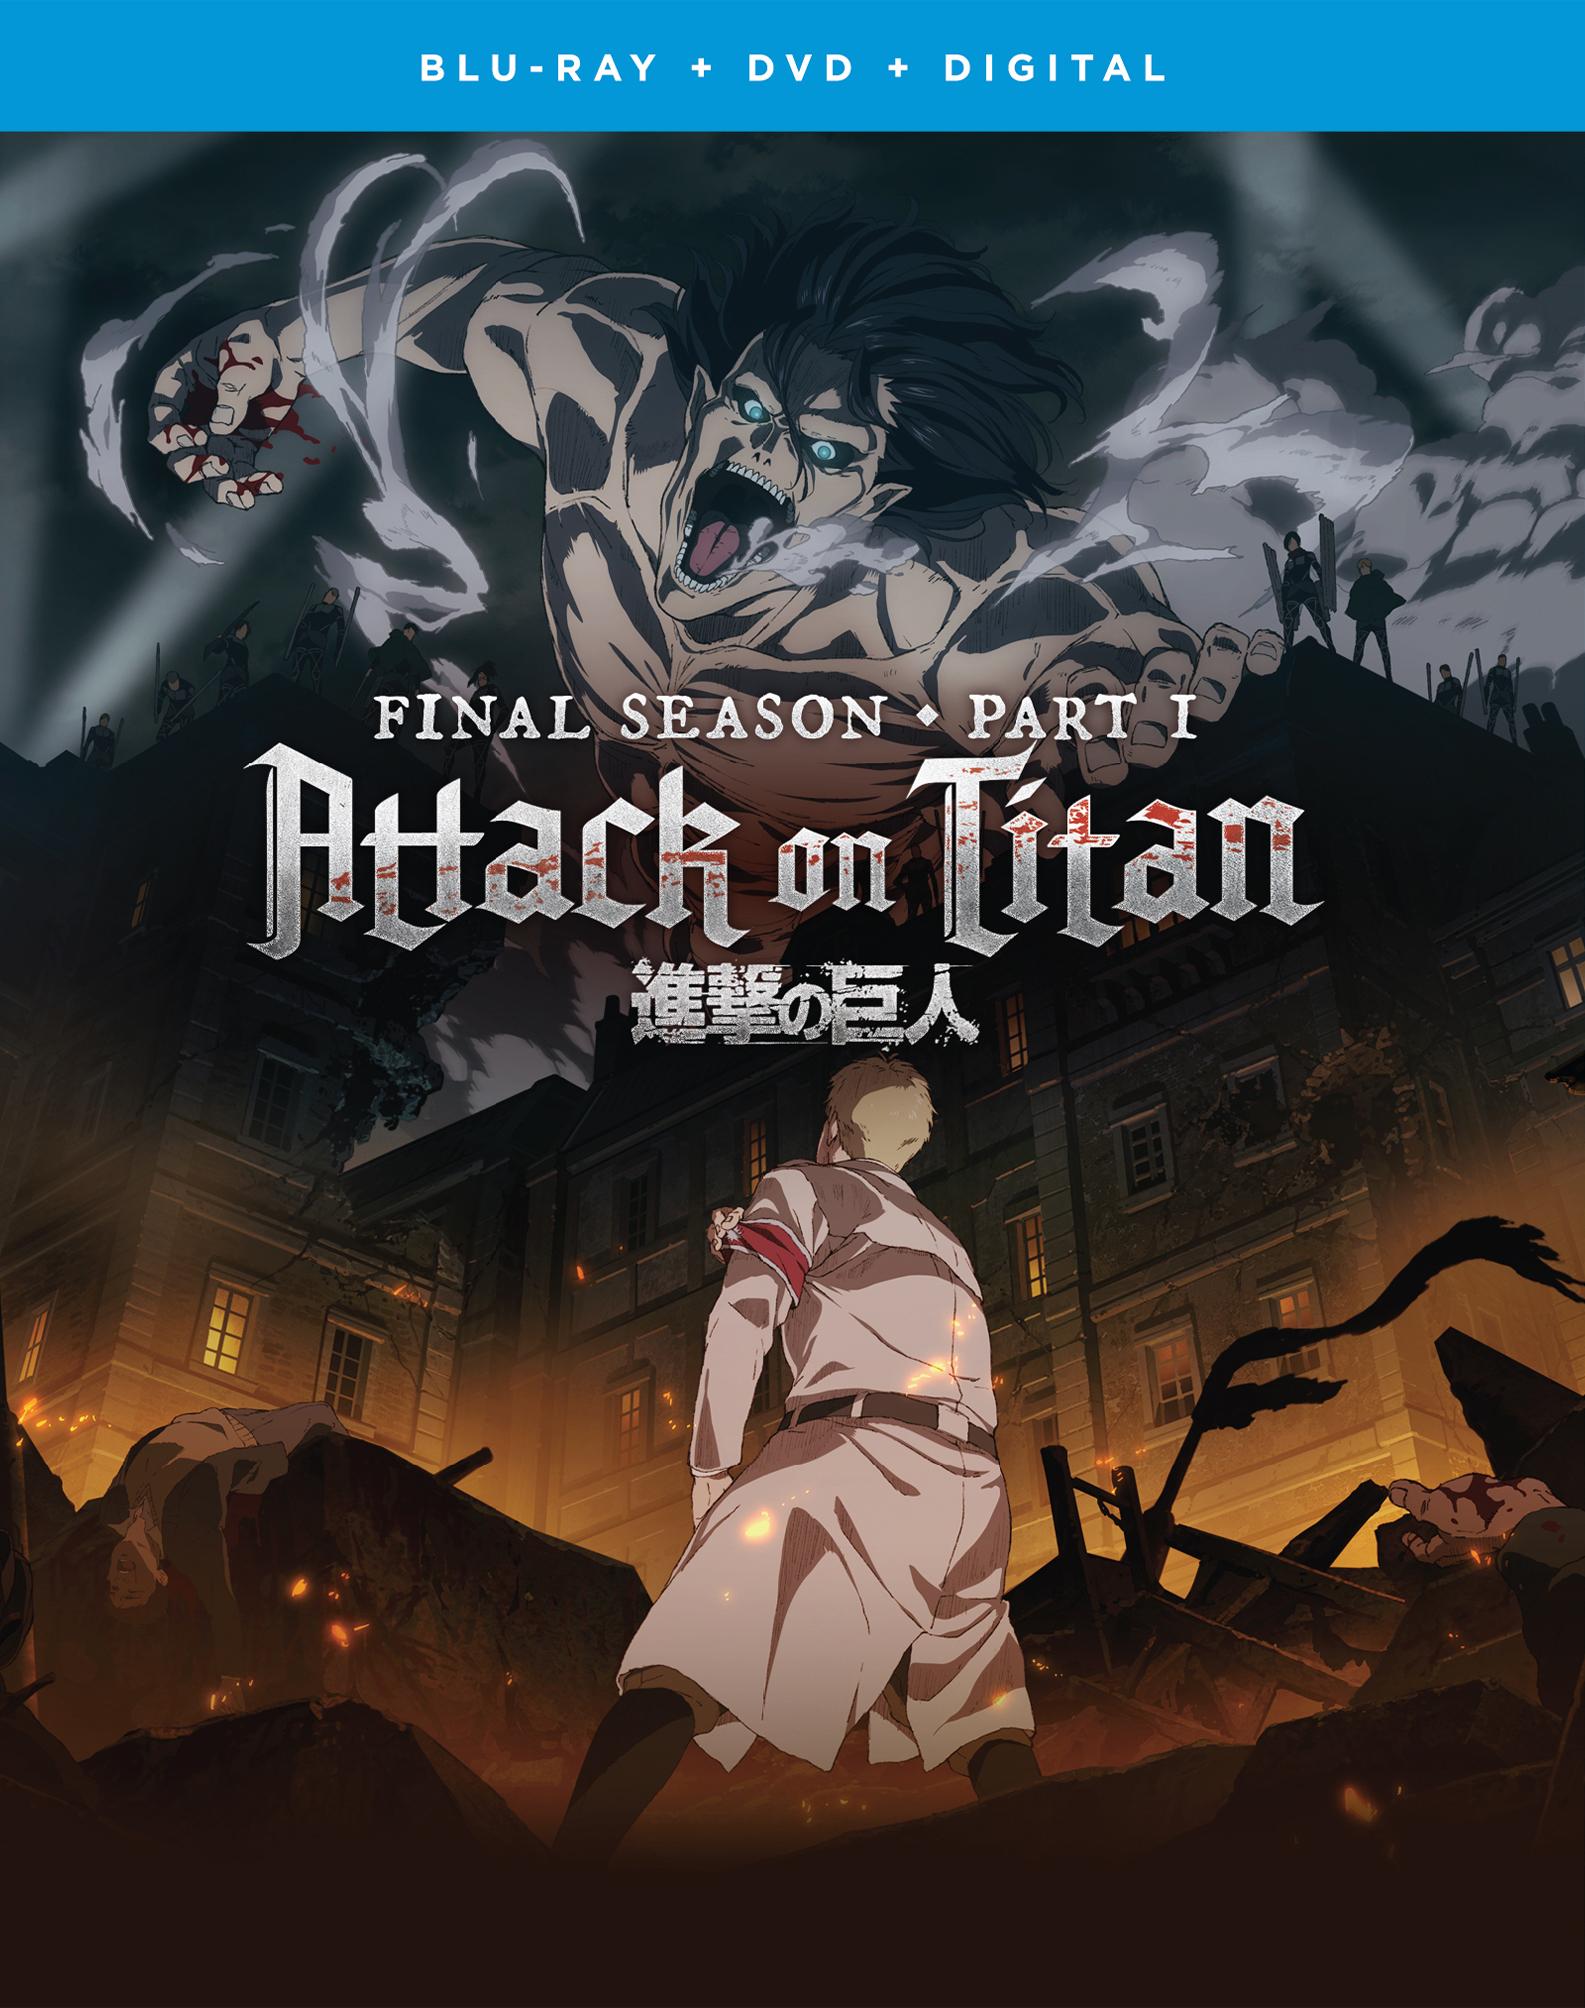 Attack on Titan Final Season Part 2 (Blu-ray + DVD)